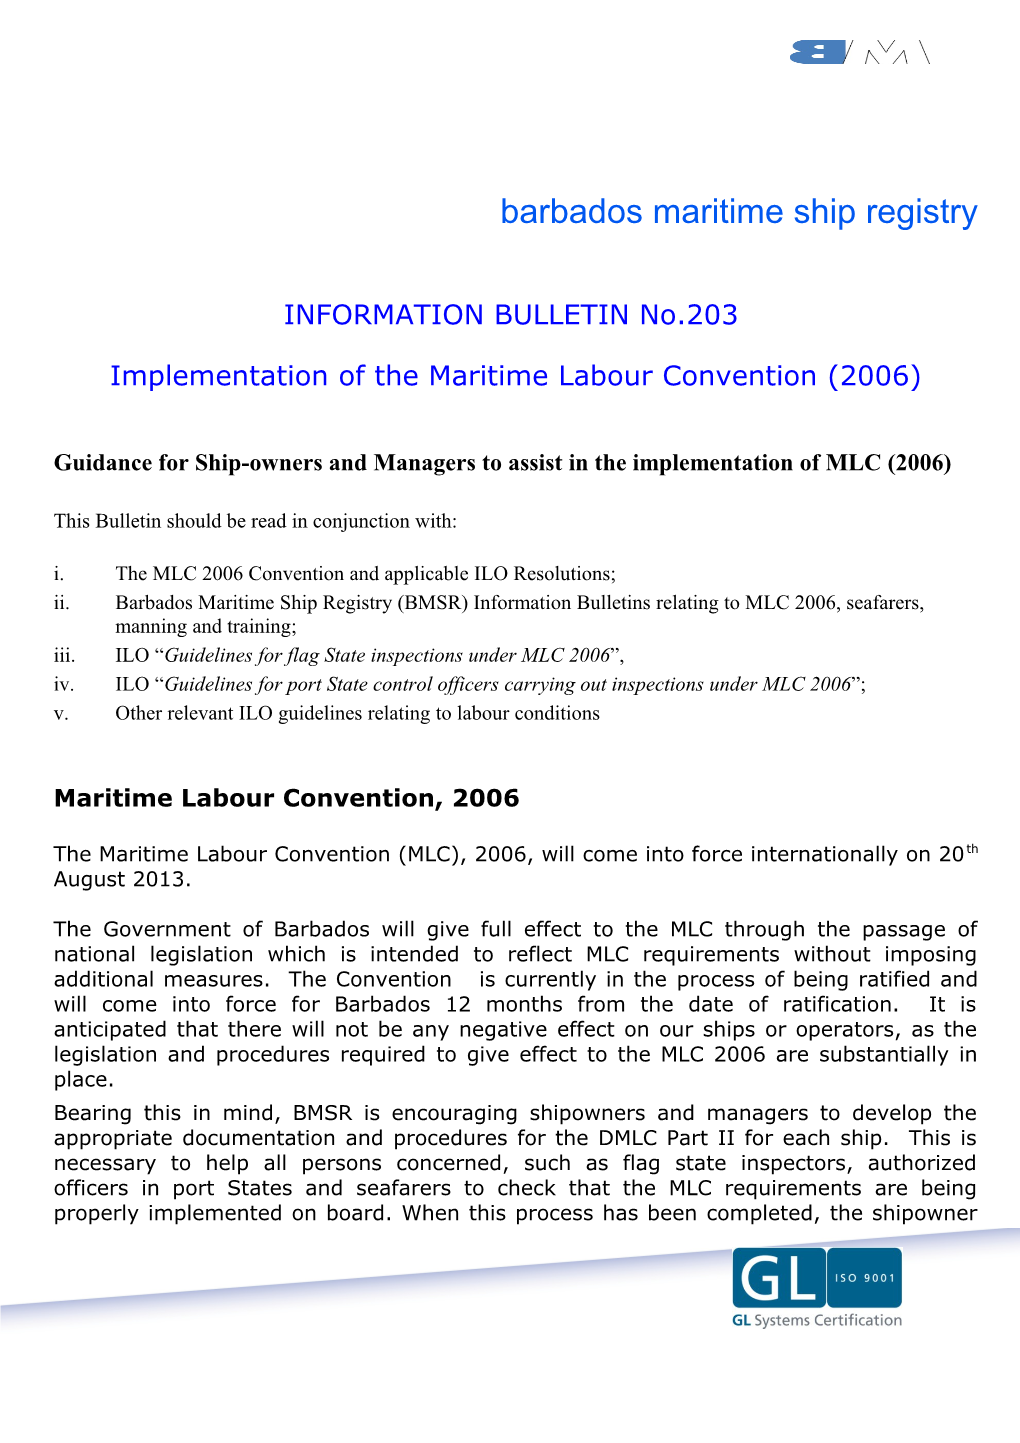 Barbados Maritime Ship Registry